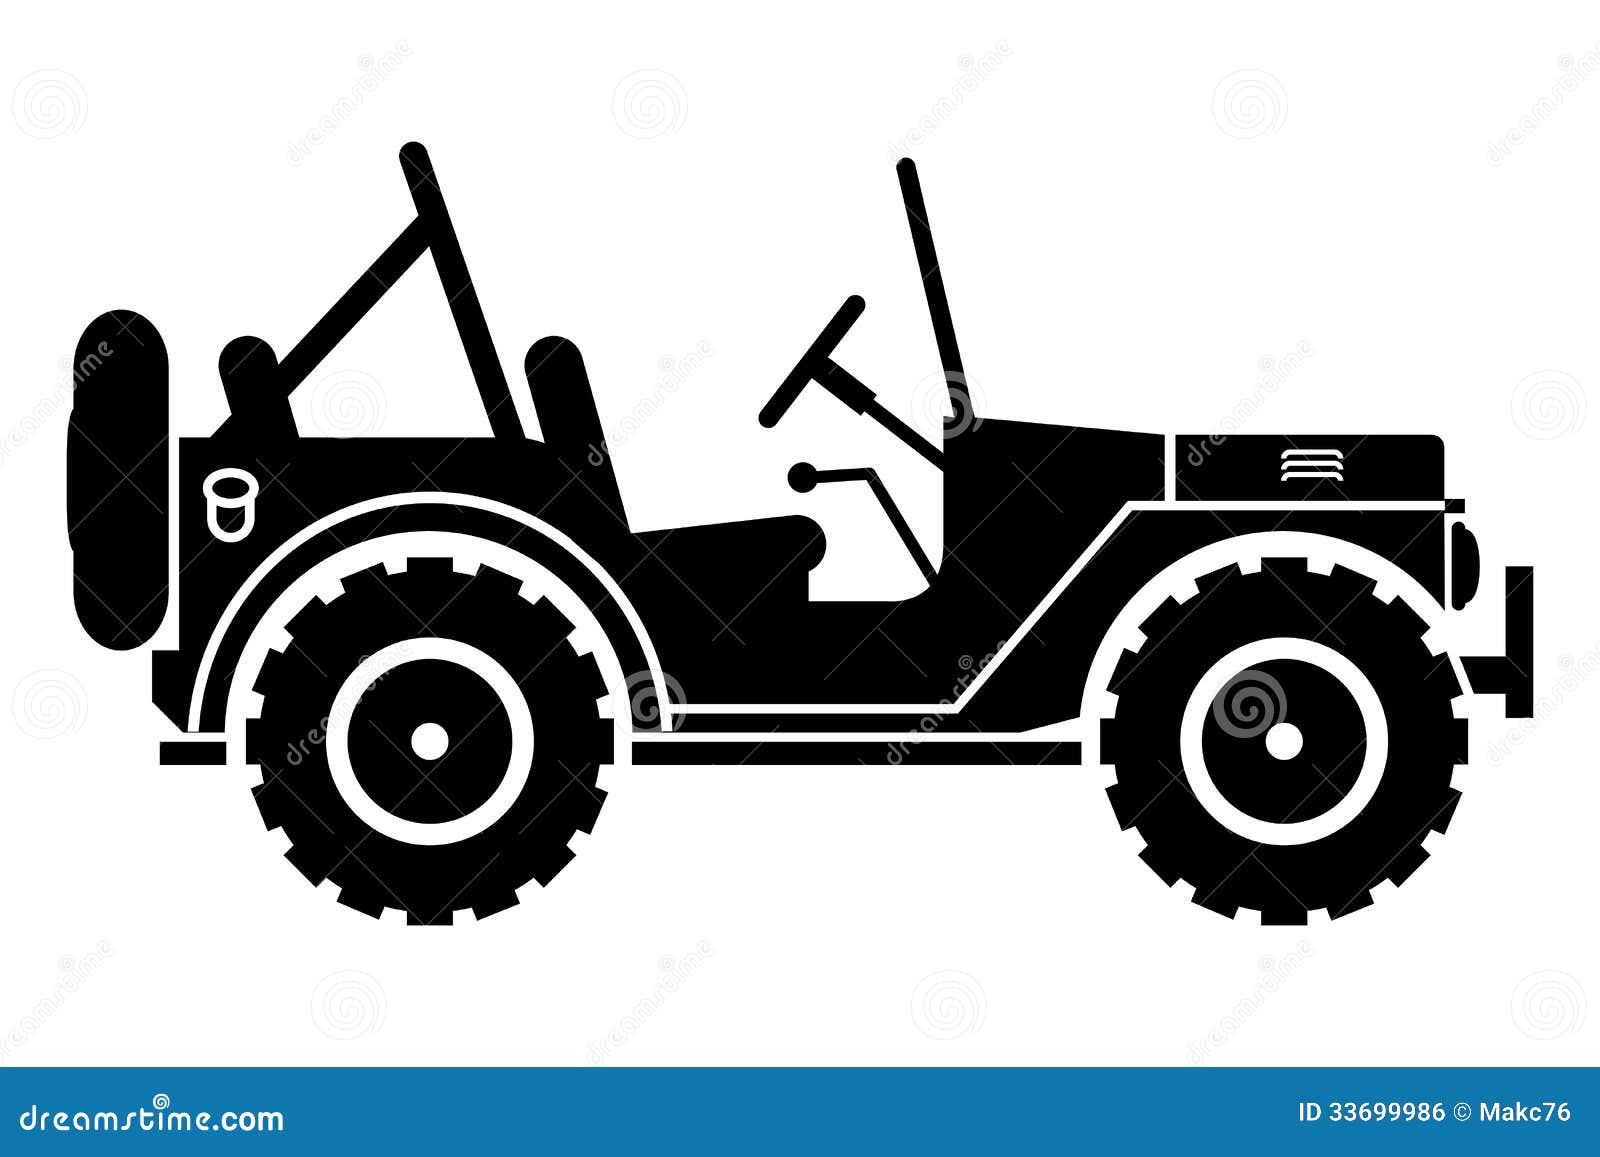 cartoon jeep clipart - photo #36